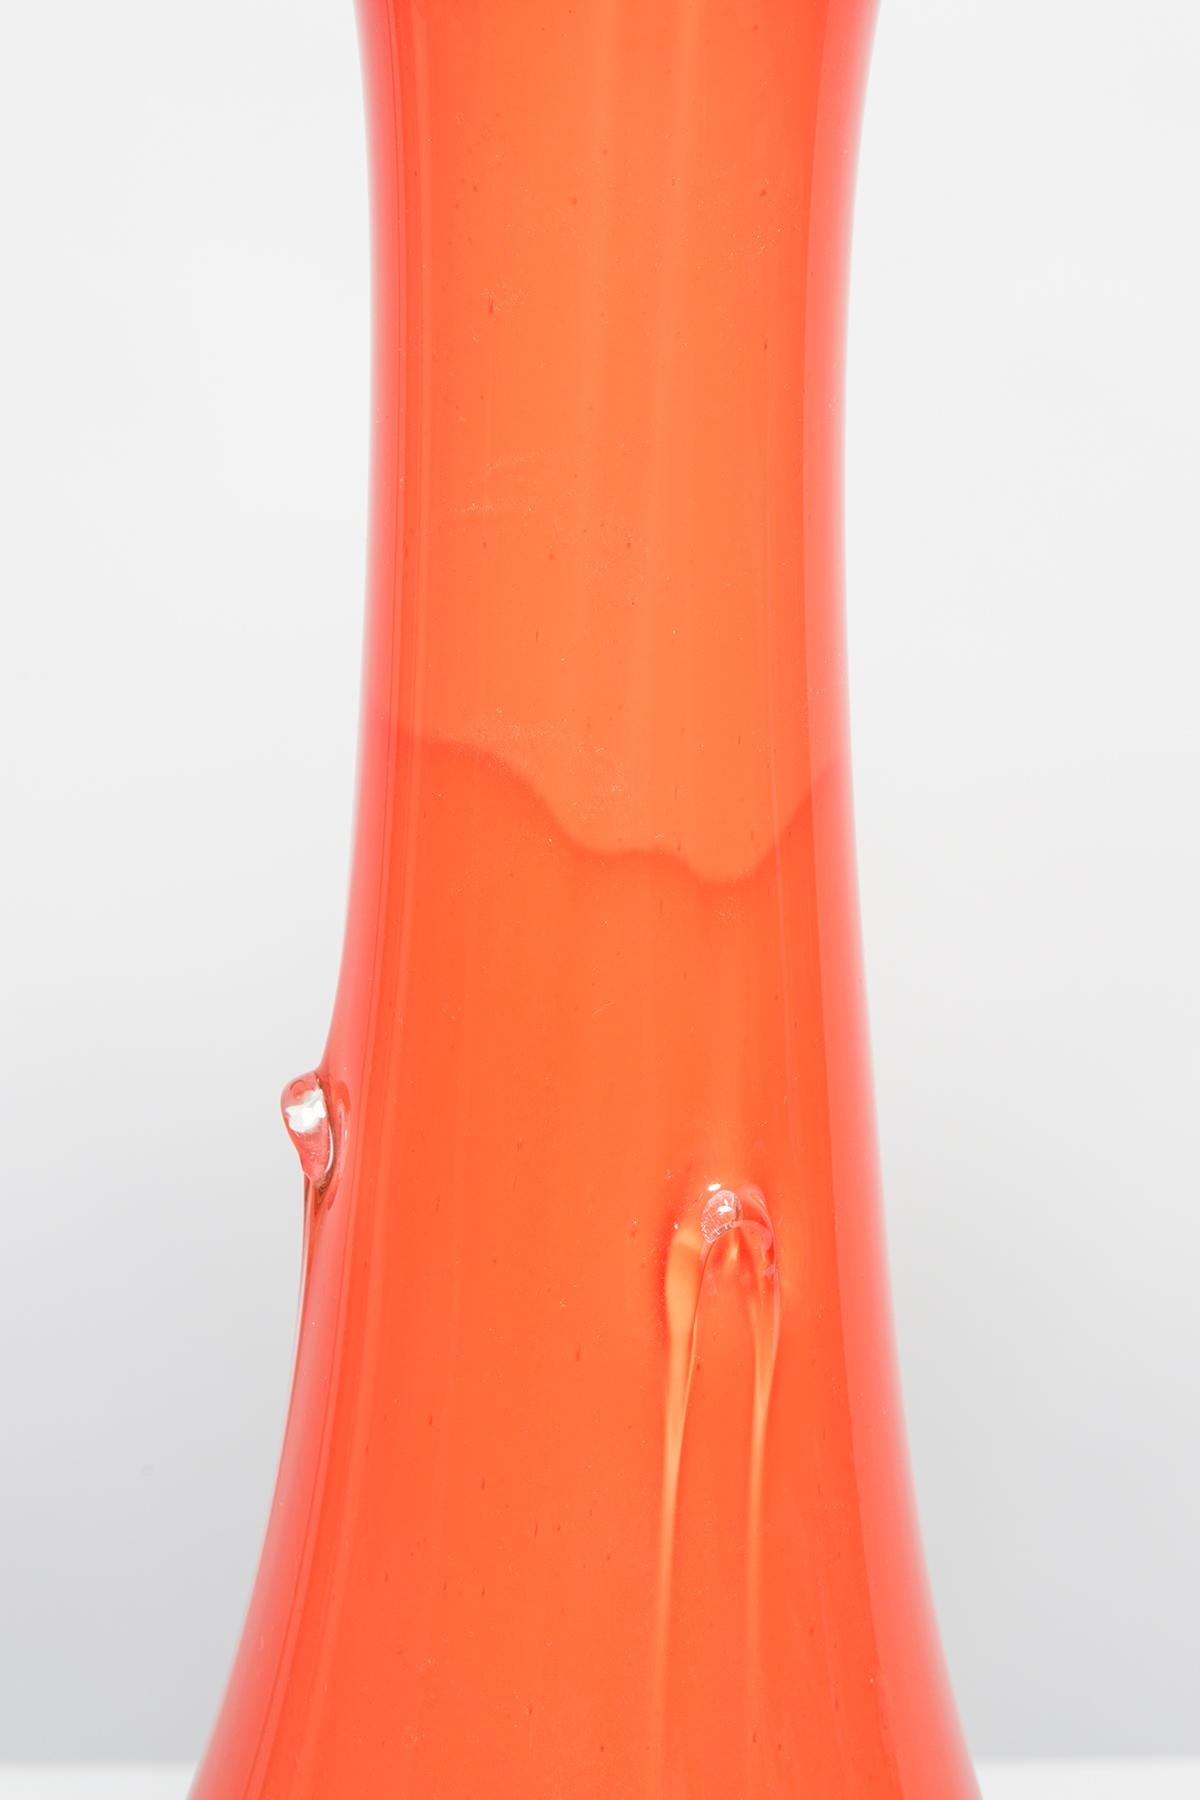 20th Century Mid Century Artistic Glass Big Orange Vase, Tarnowiec, Sulczan, Europe, 1970s For Sale